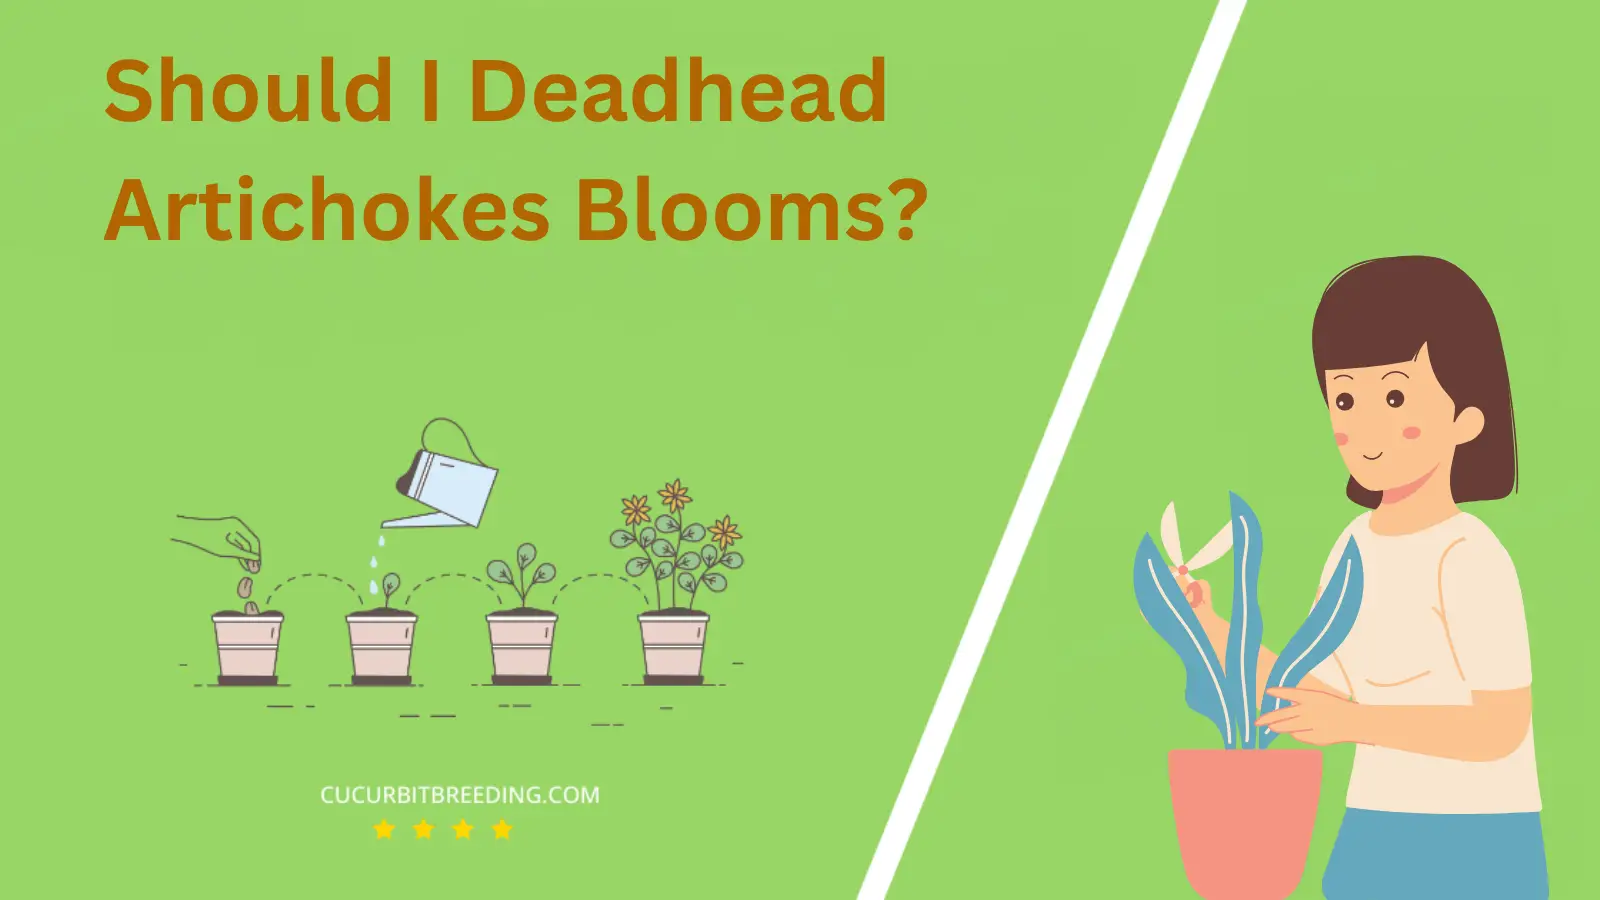 Should I Deadhead Artichokes Blooms?